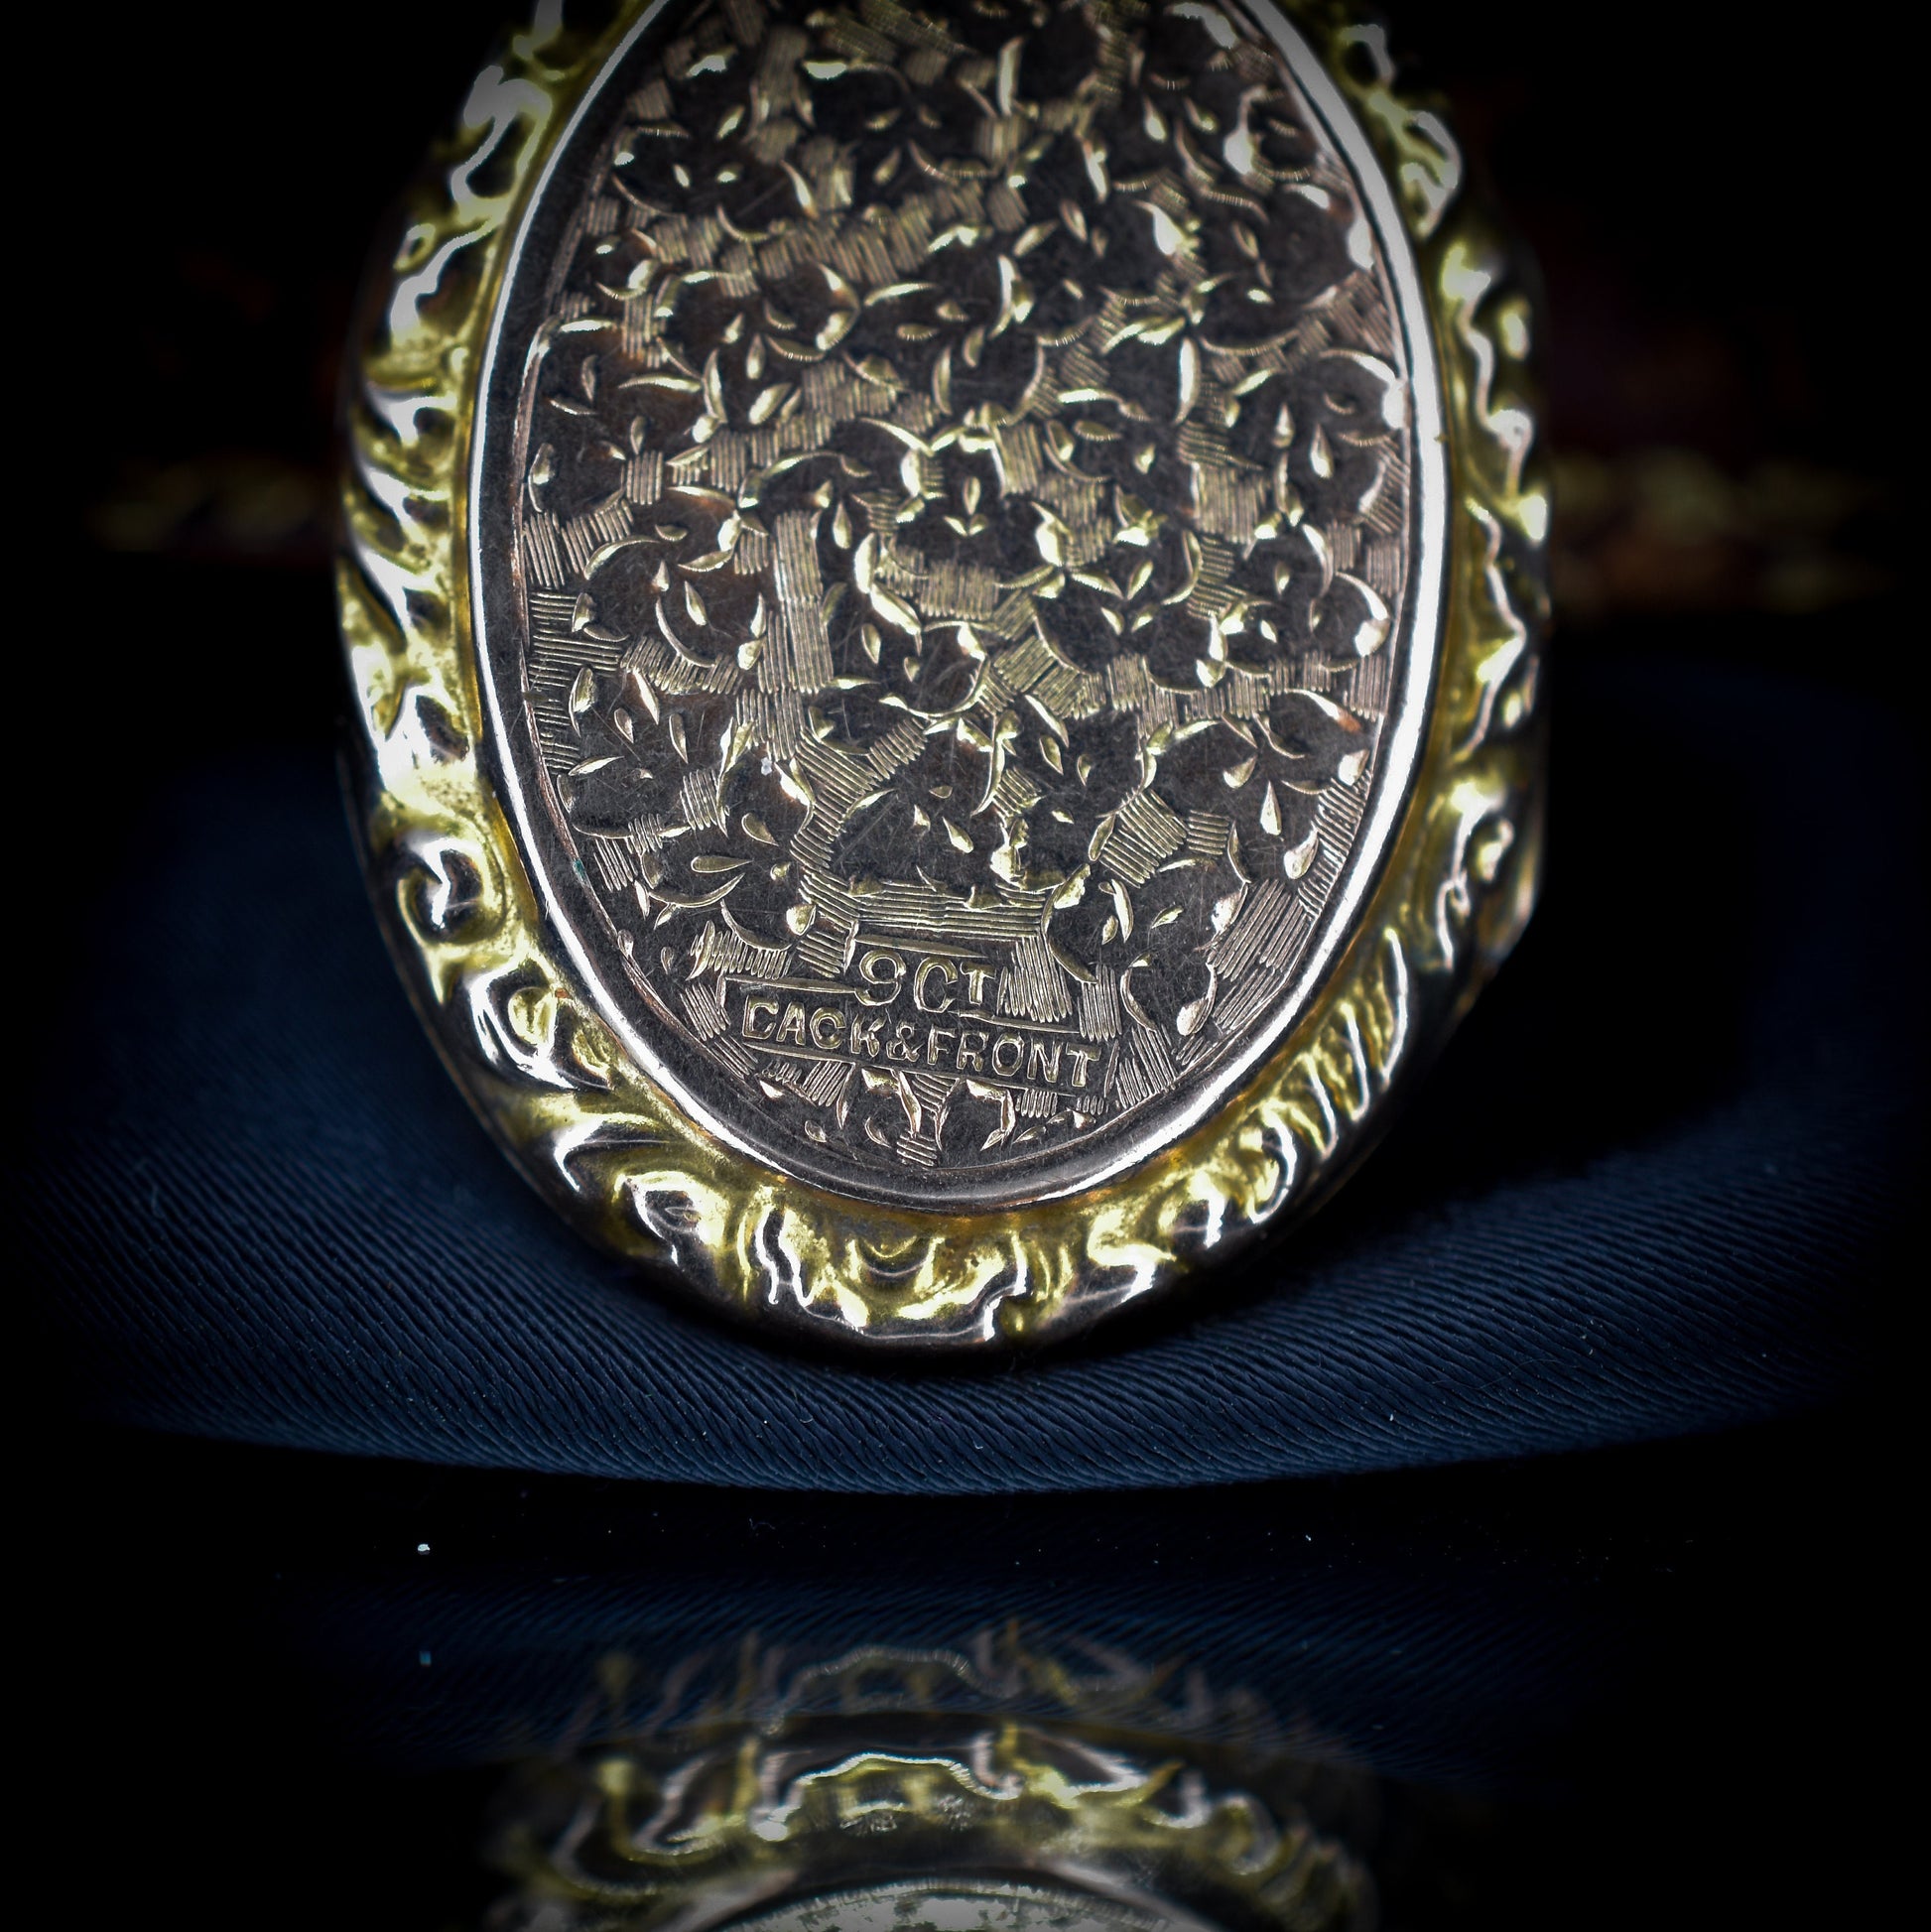 Antique Ivy 9ct 9K Gold Engraved Oval Photo Locket Pendant - Edwardian